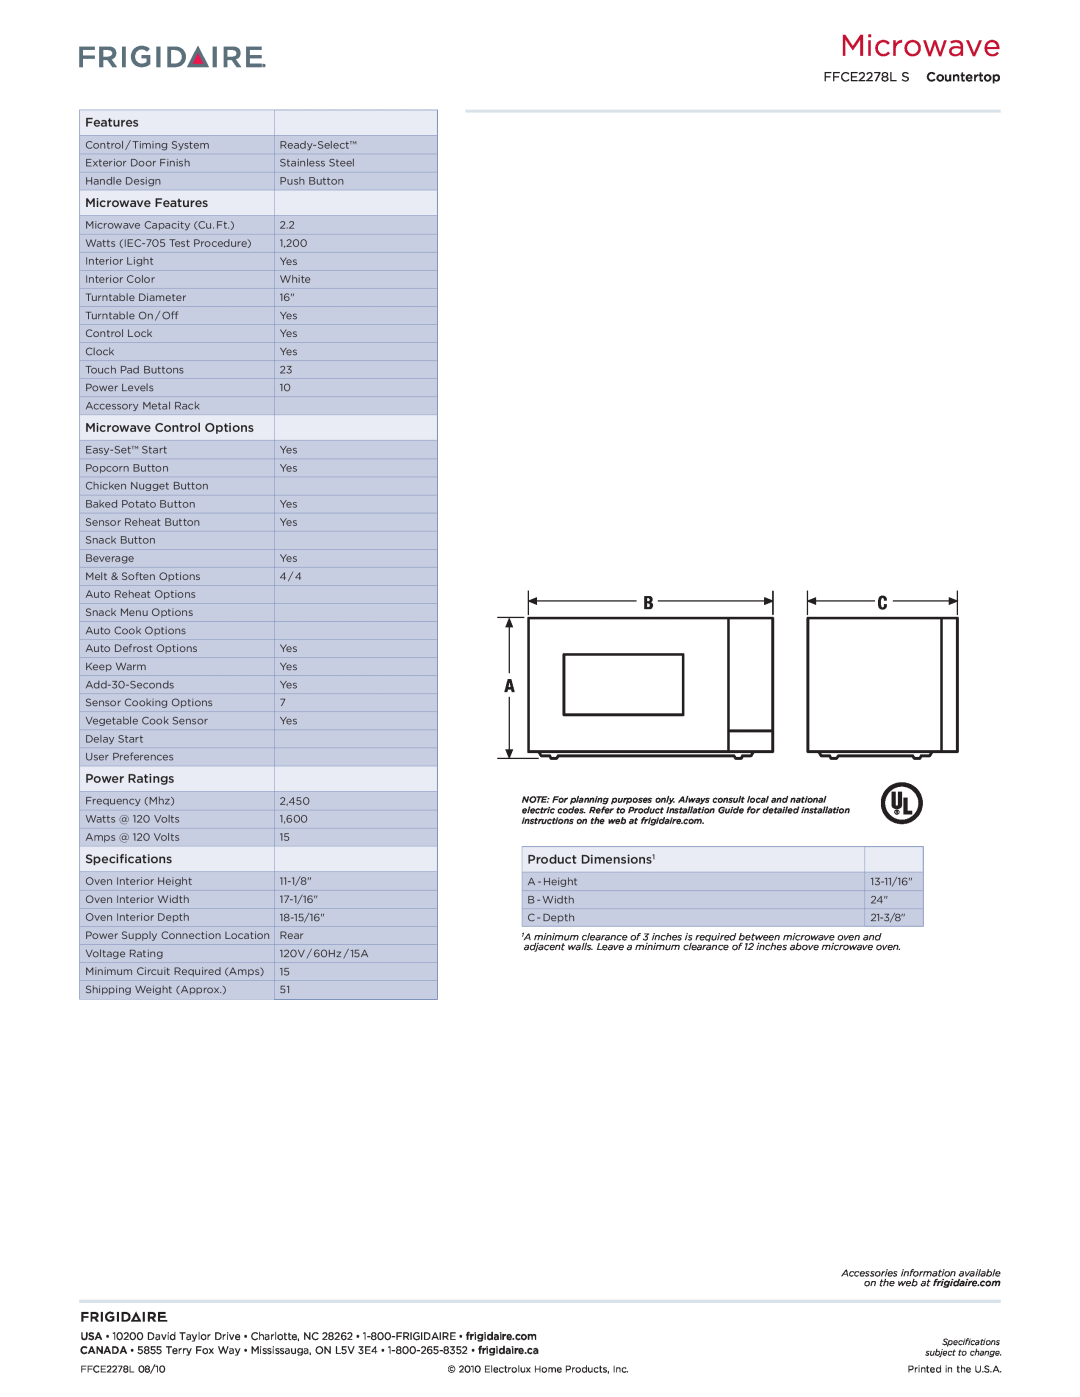 Frigidaire dimensions Microwave, FFCE2278L S Countertop 